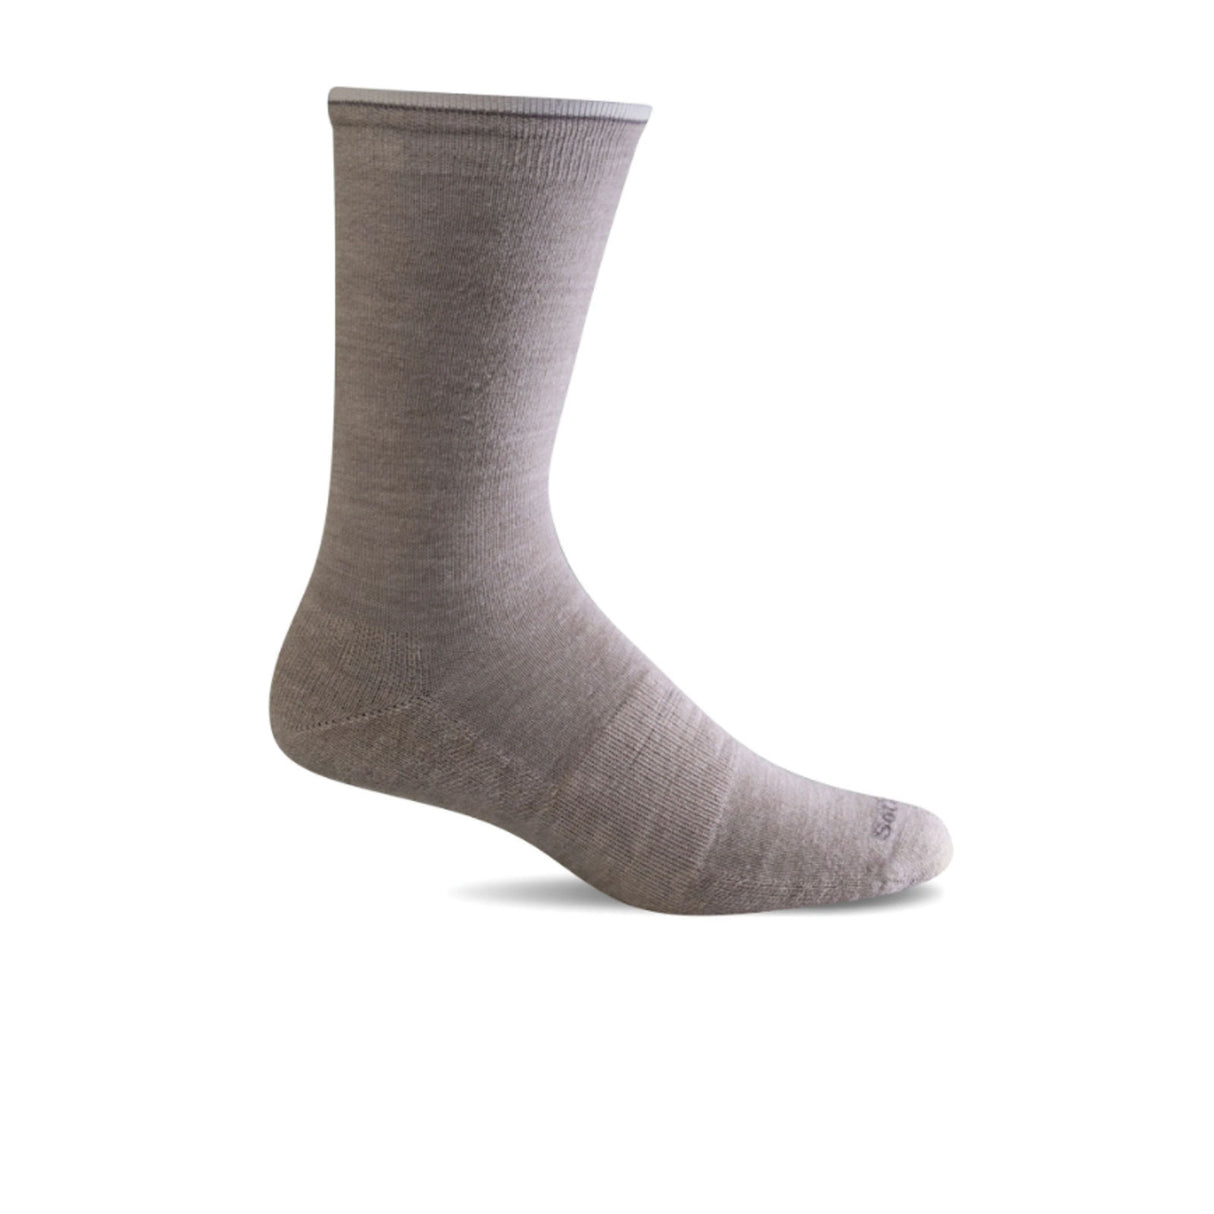 Sockwell Skinny Minnie Crew Sock (Women) - Putty Accessories - Socks - Lifestyle - The Heel Shoe Fitters